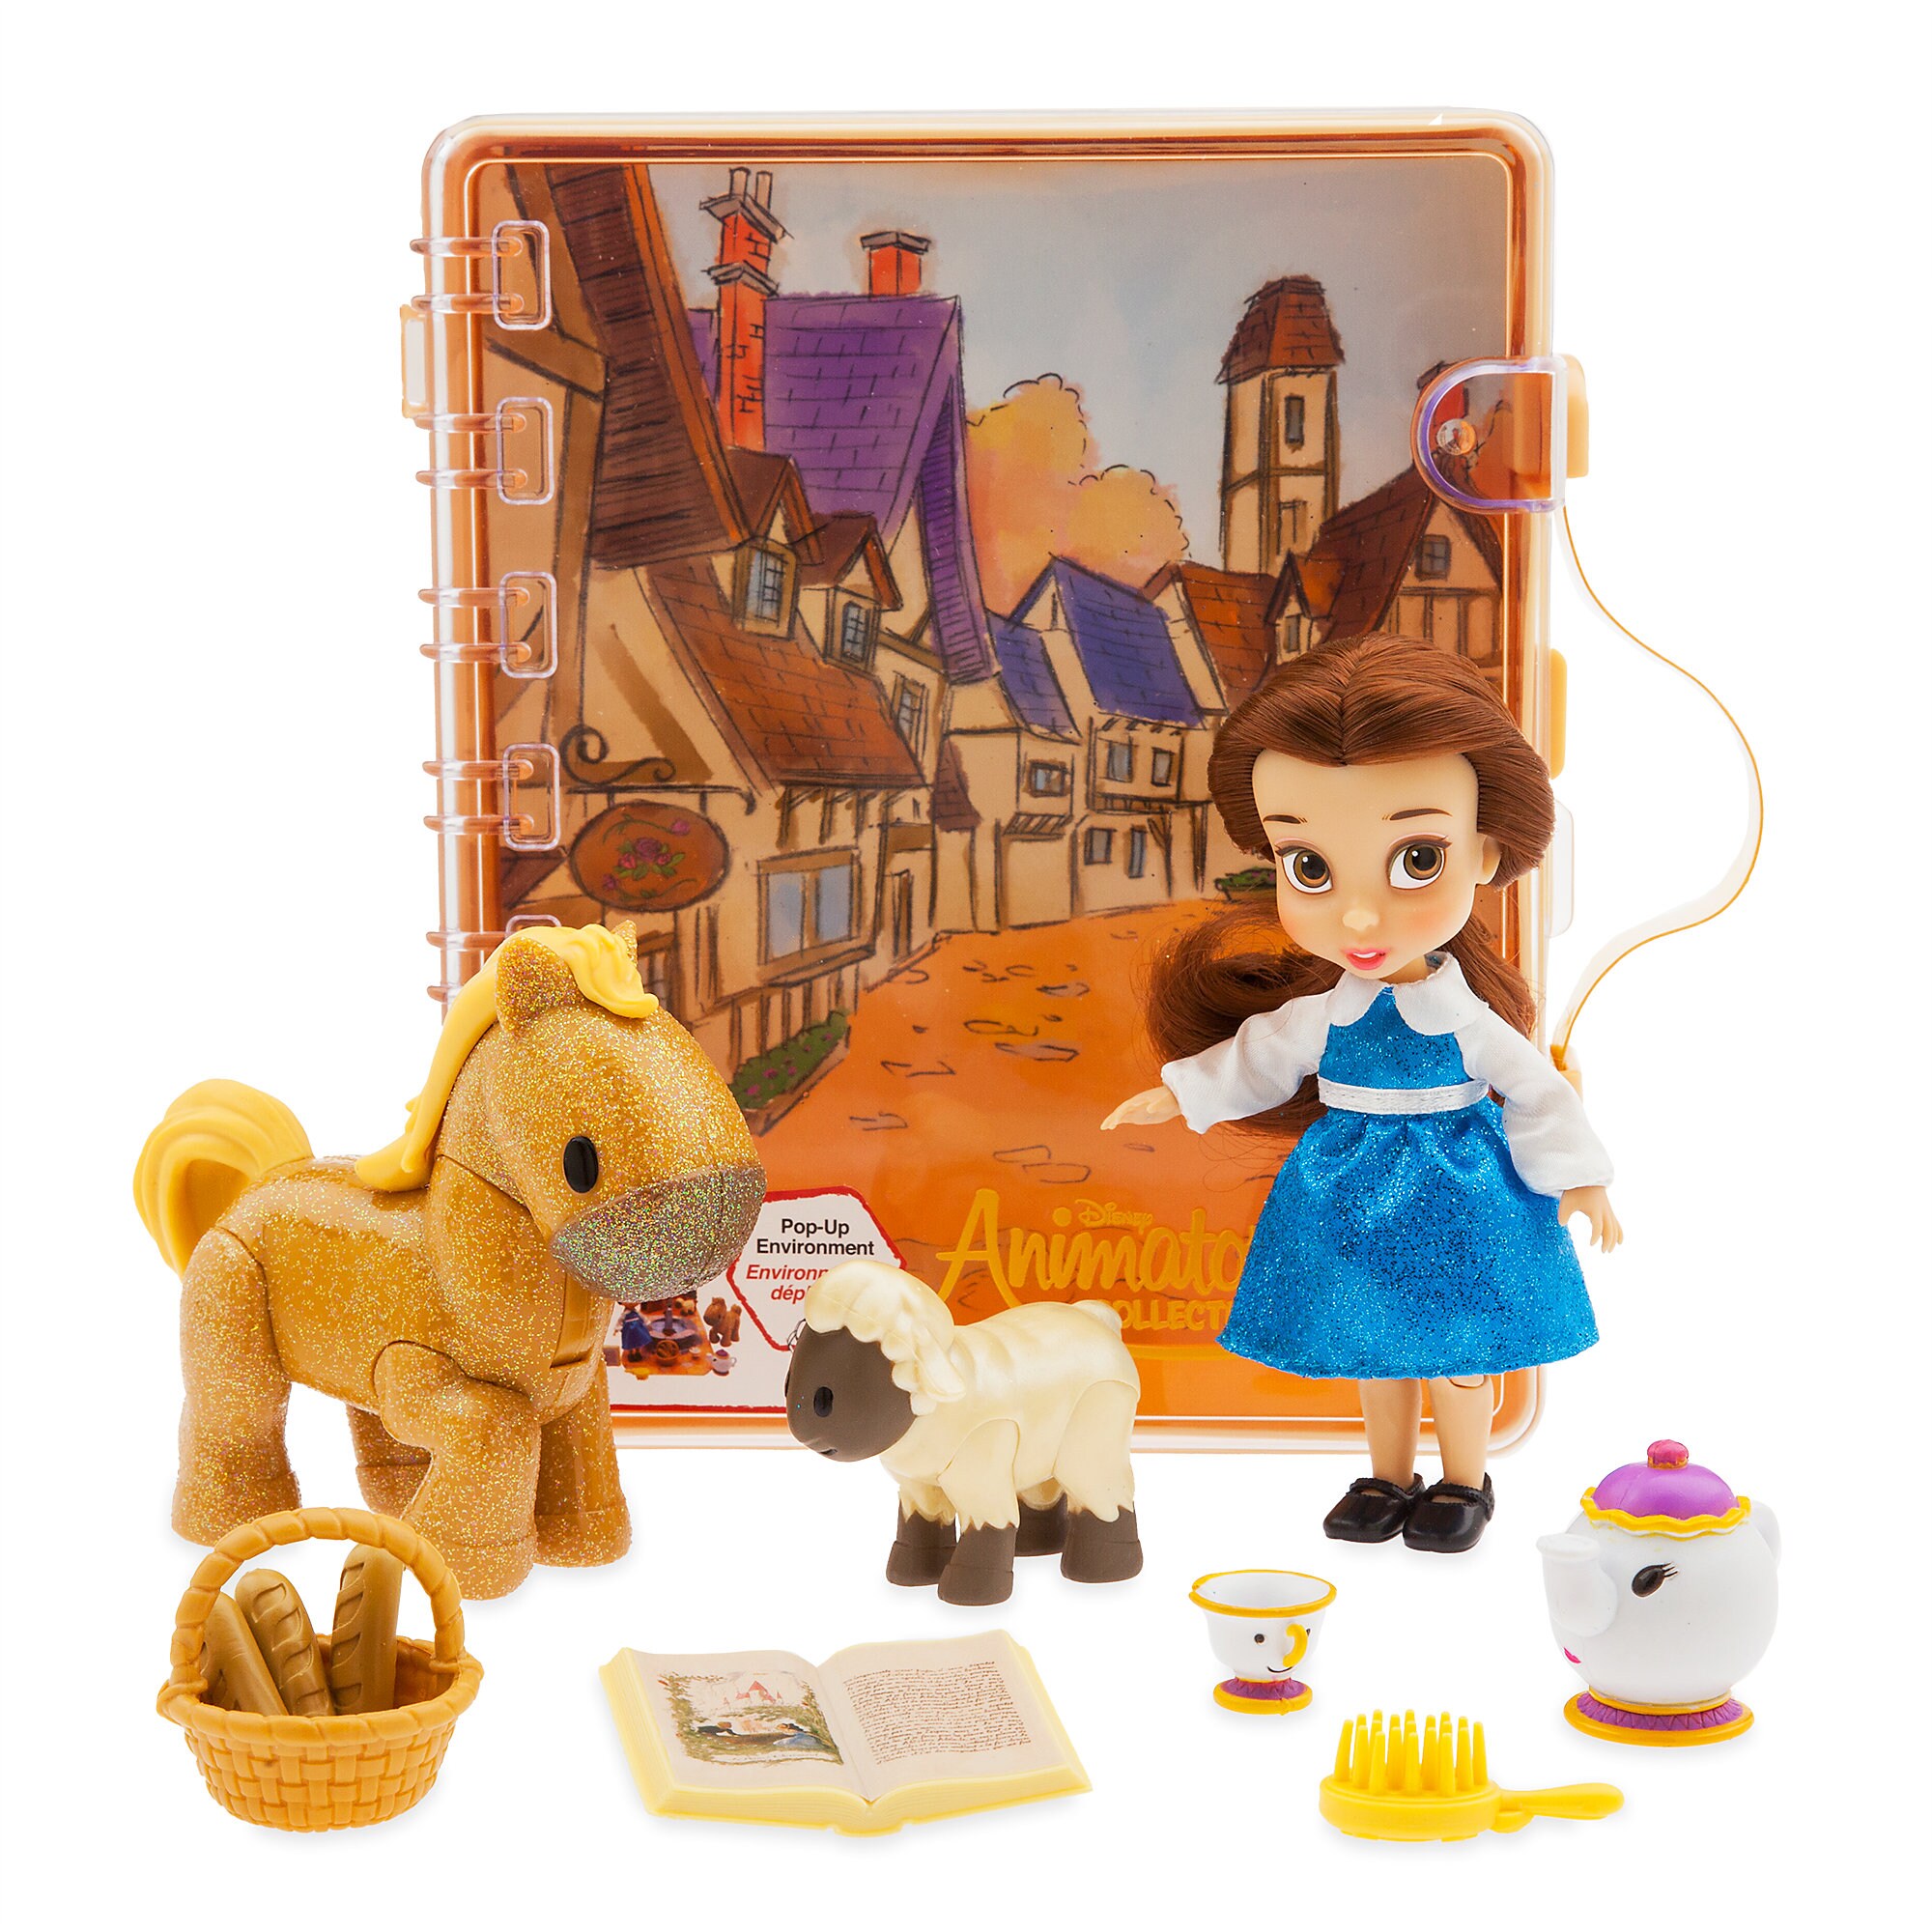 Disney Animators' Collection Belle Mini Doll Play Set